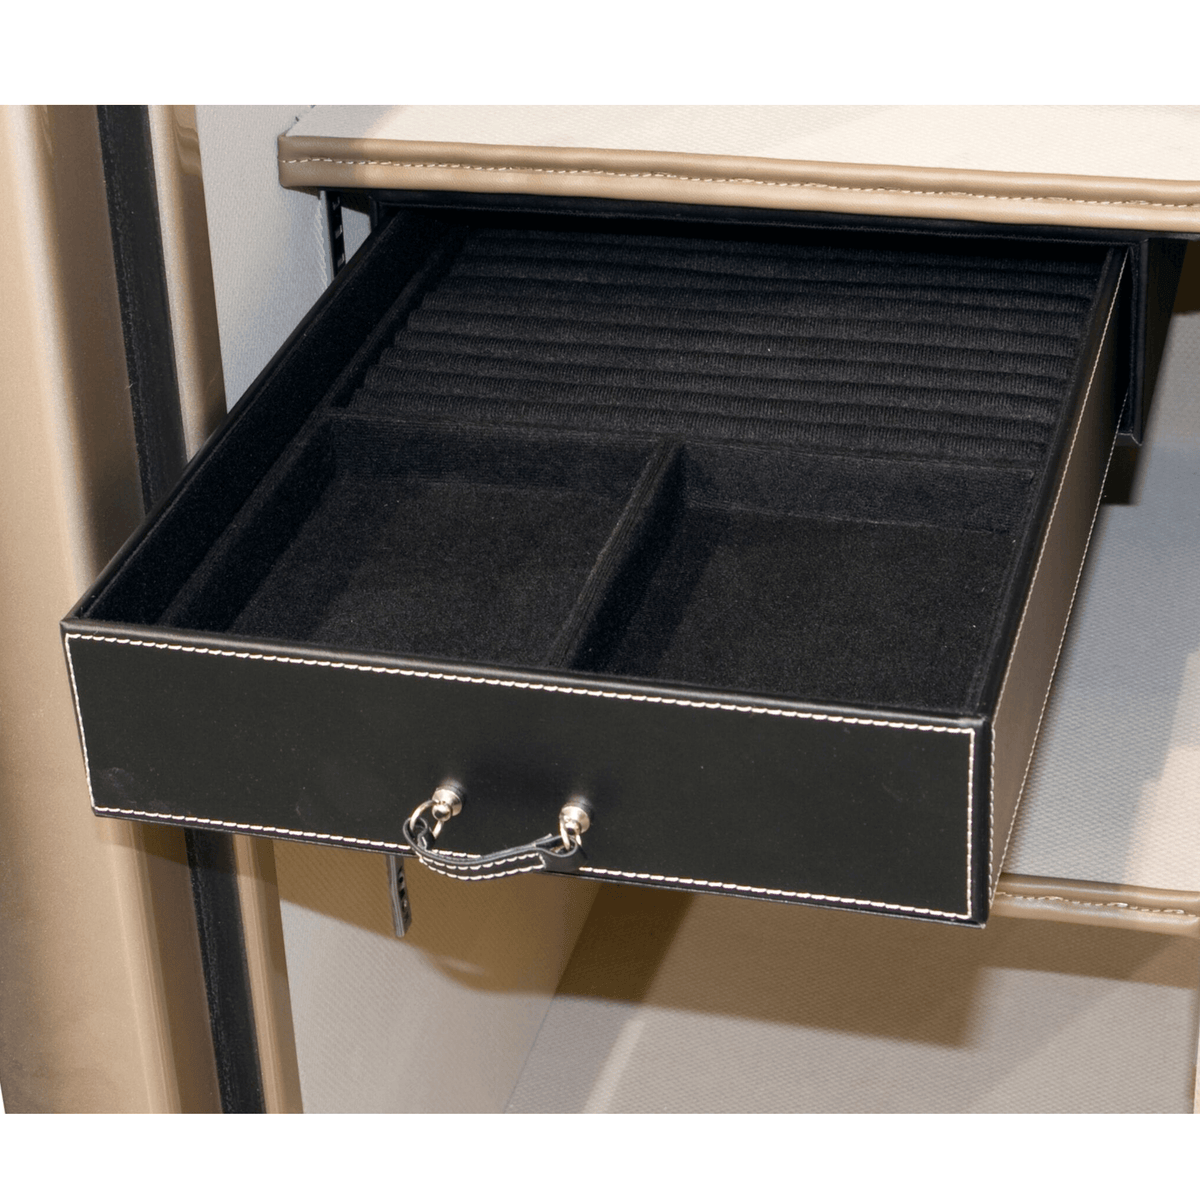 Accessory - Storage - Jewelry Drawer - 15 inch - under shelf mount